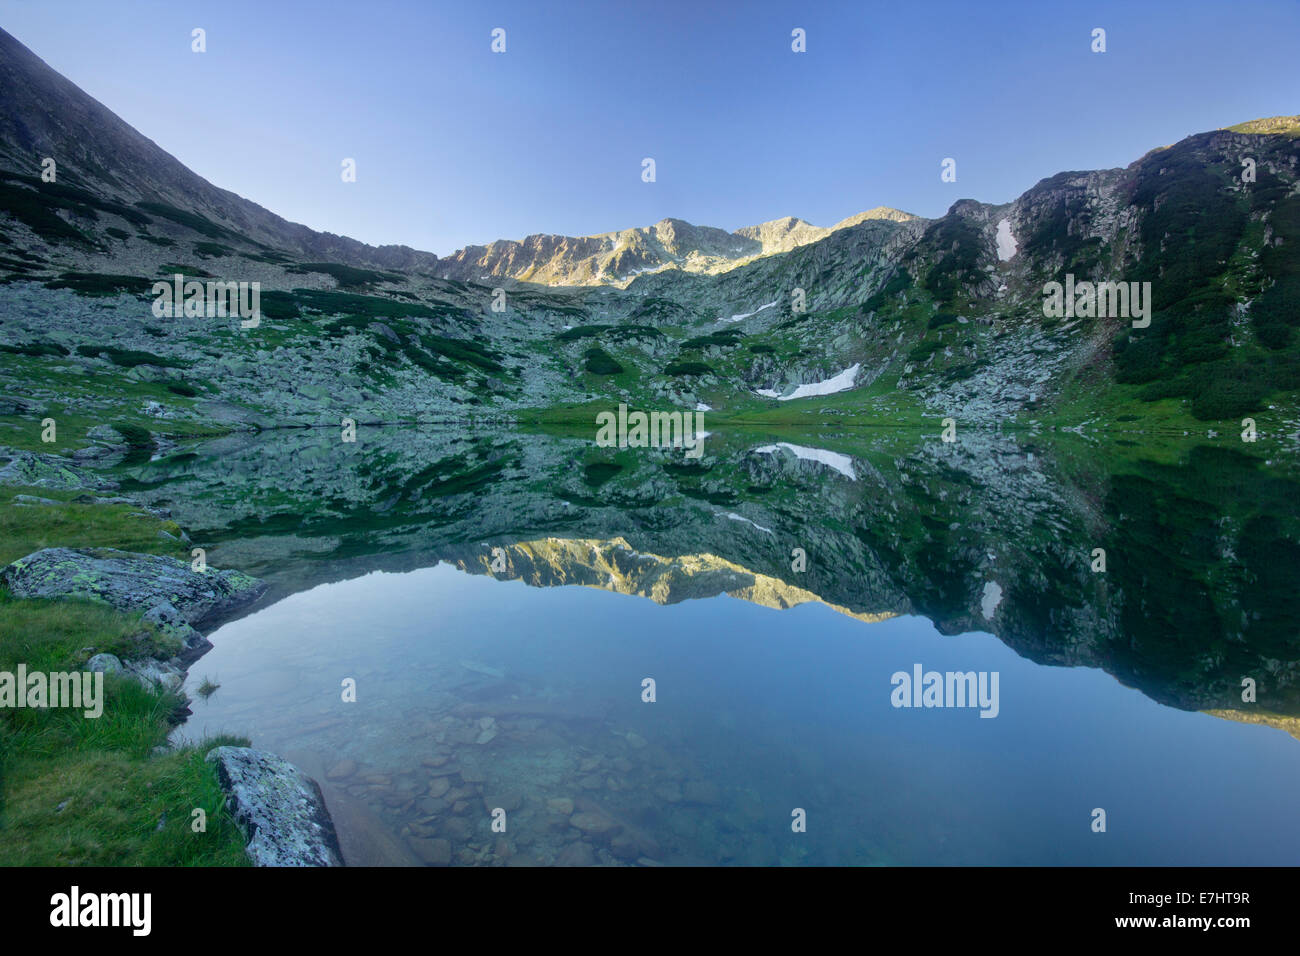 Morning reflection in an alpine glacial lake in the Retezat National Park, Carpathian Mountains, Romania Stock Photo